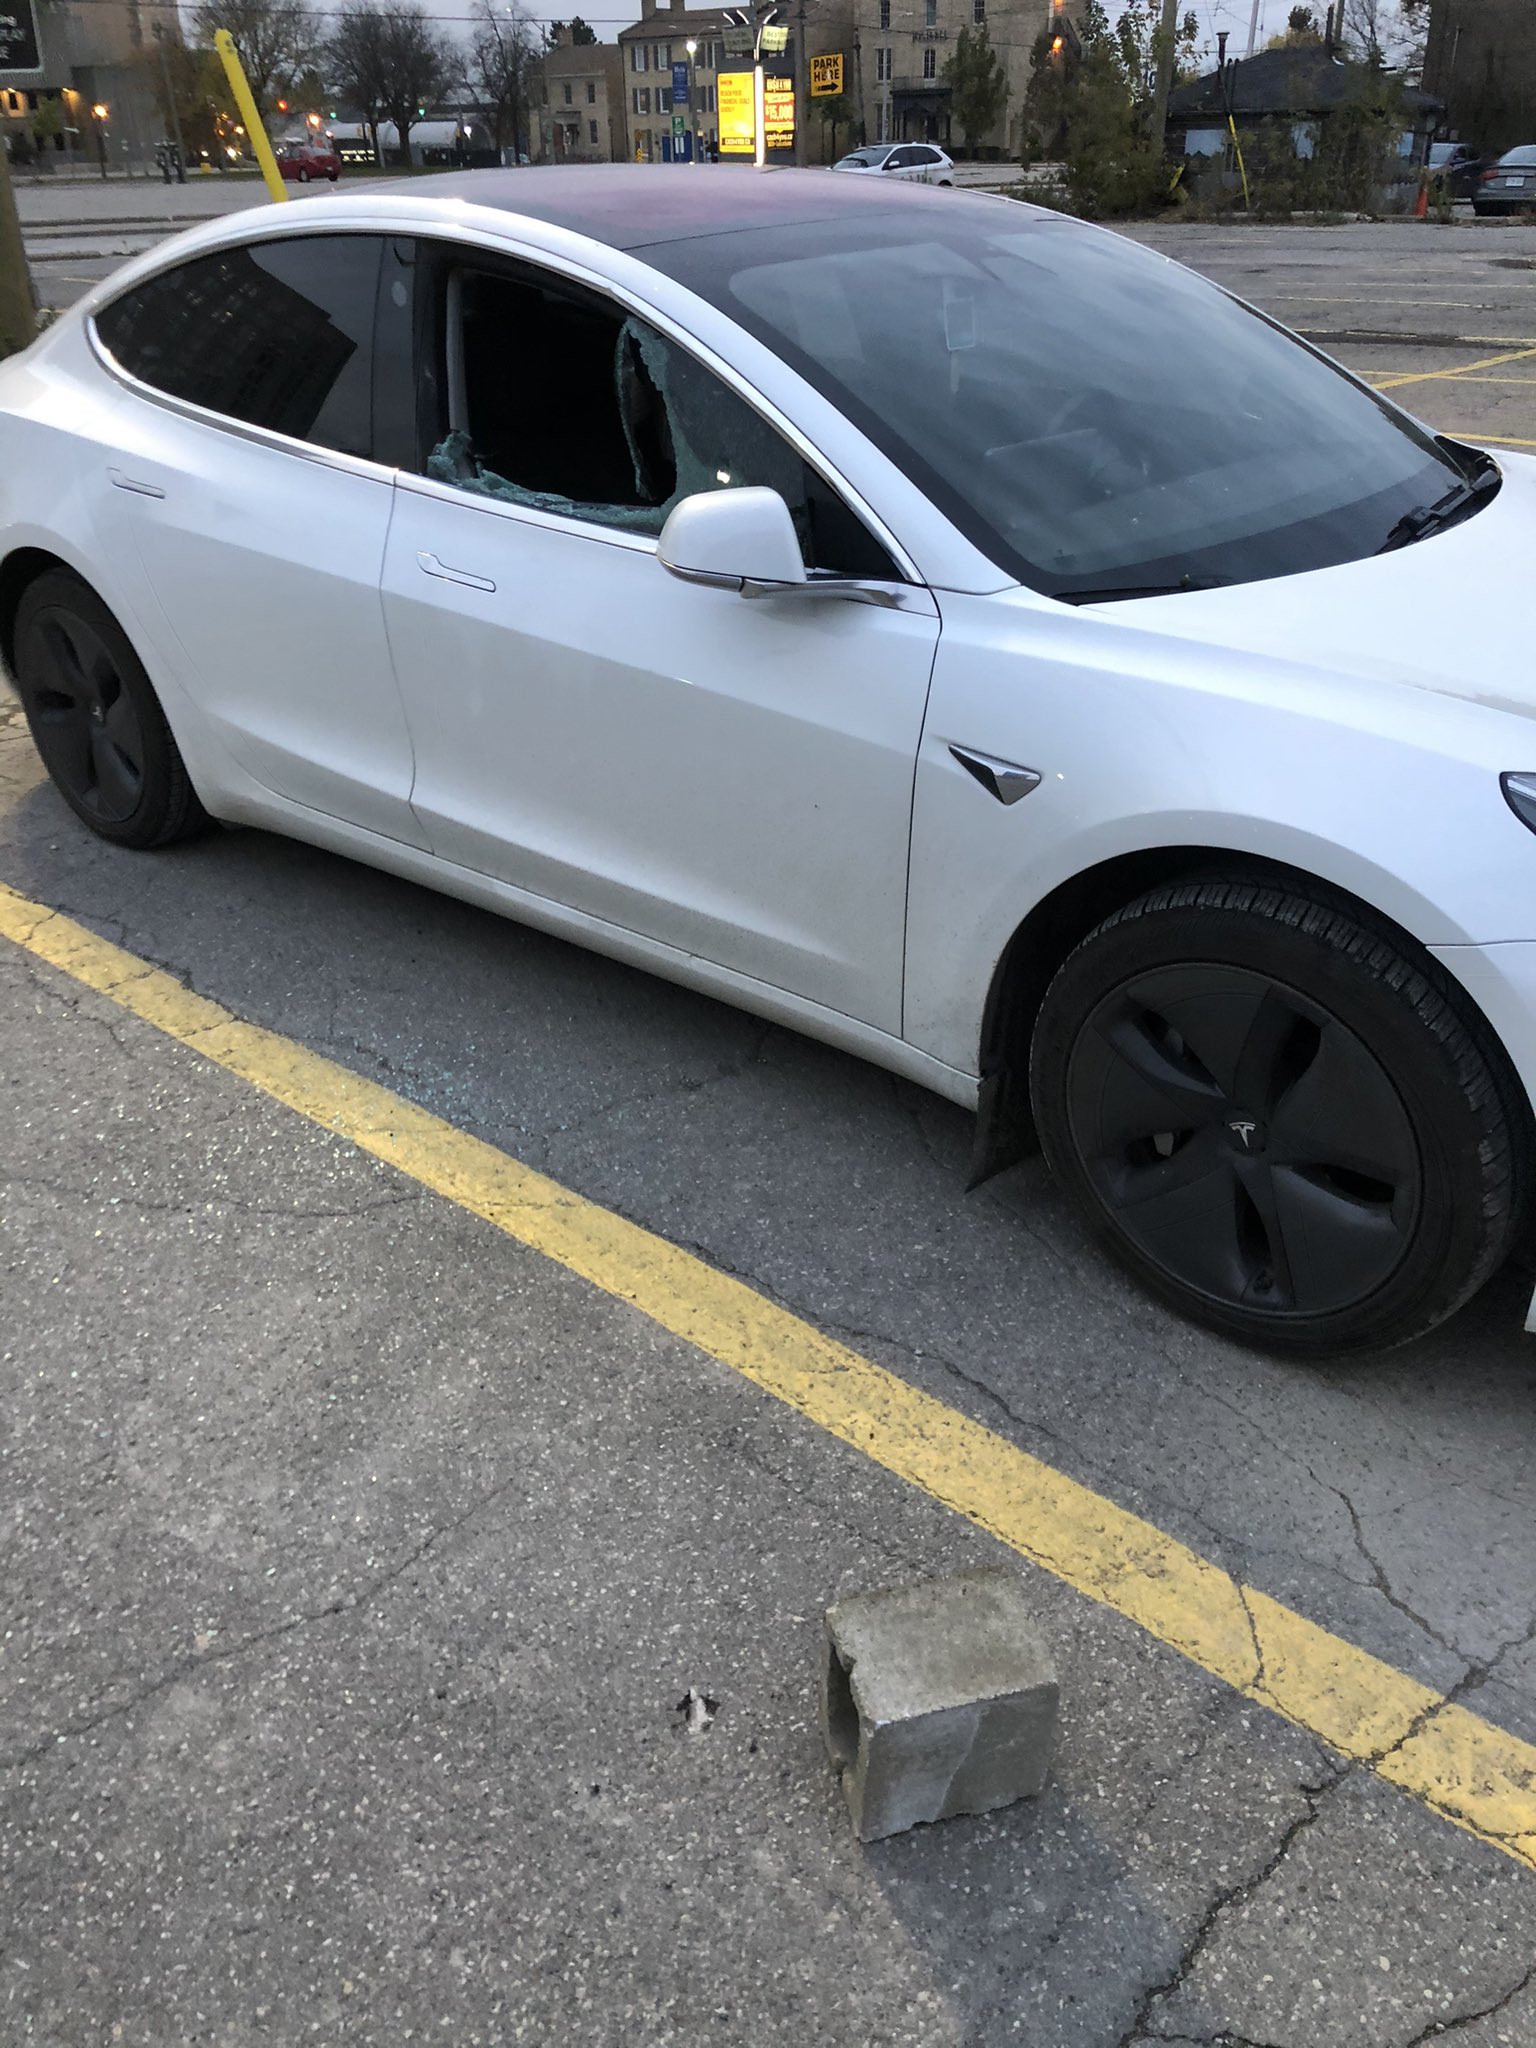 Tesla Model 3 London damage